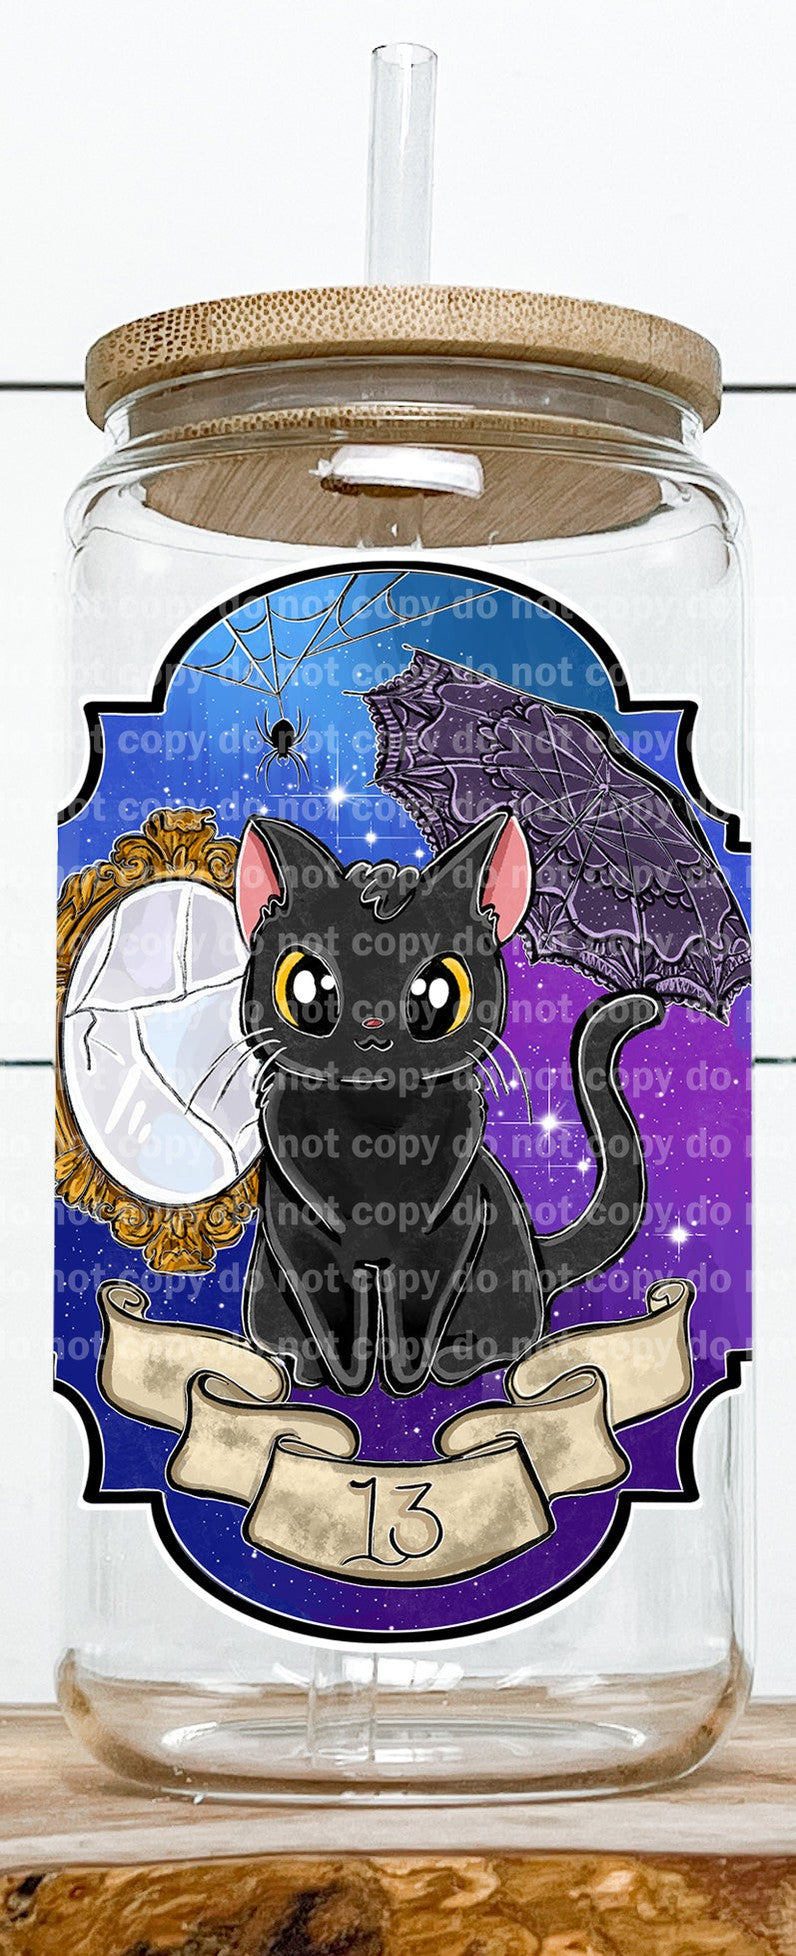 Black cat broken Mirror umbrella 13 superstitions superstitious Decal 3.3 x 4.5